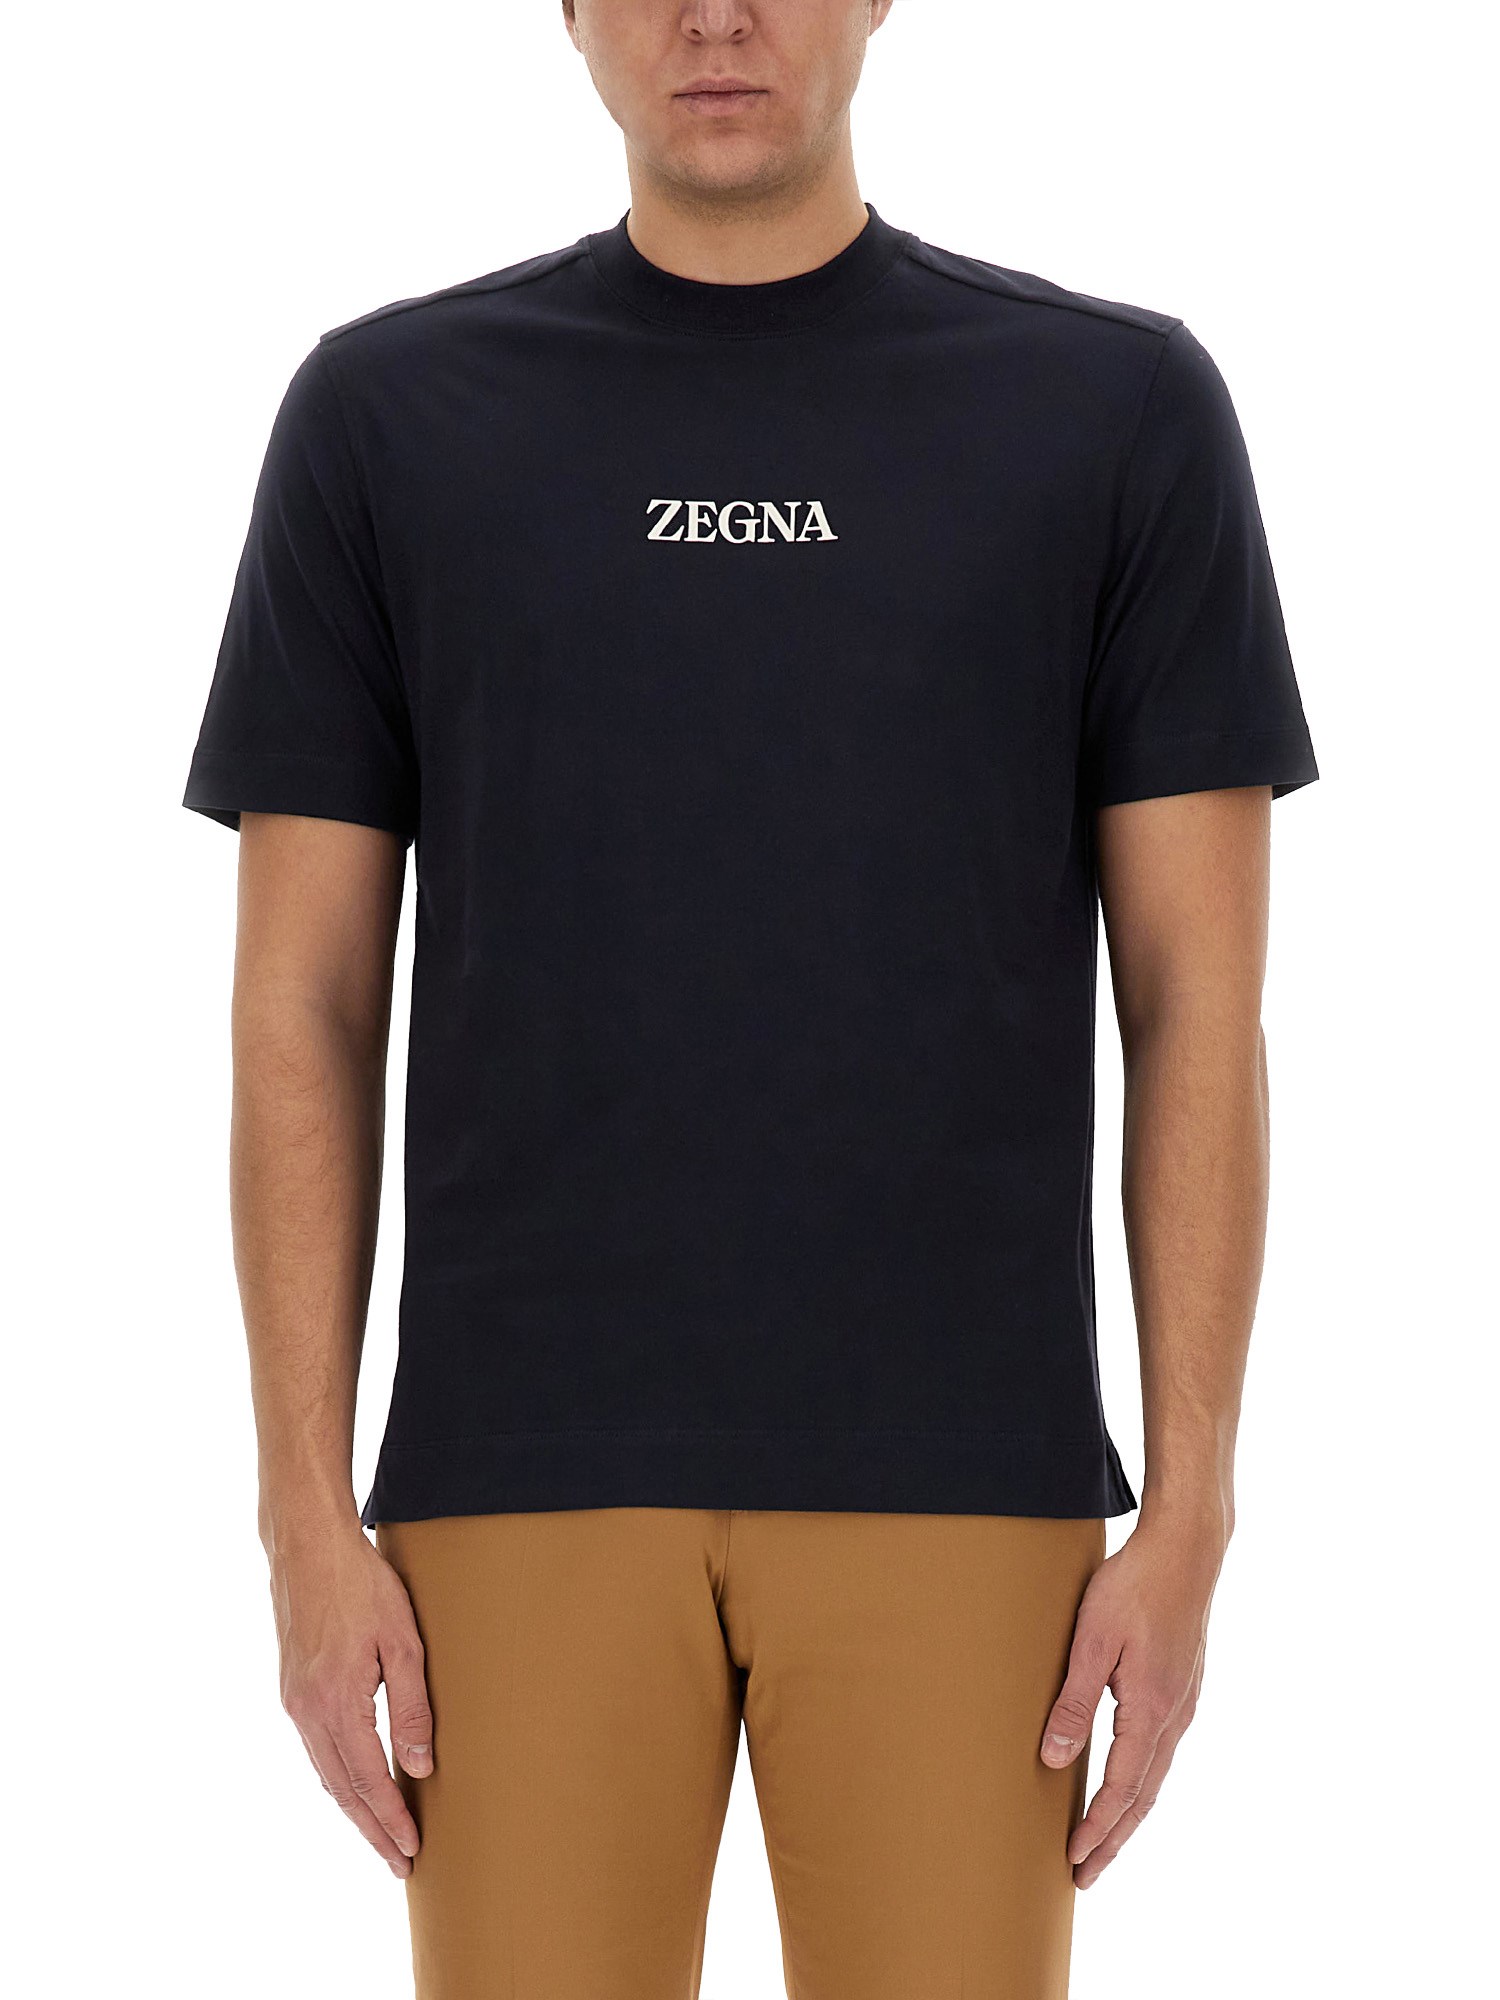 zegna t-shirt with logo